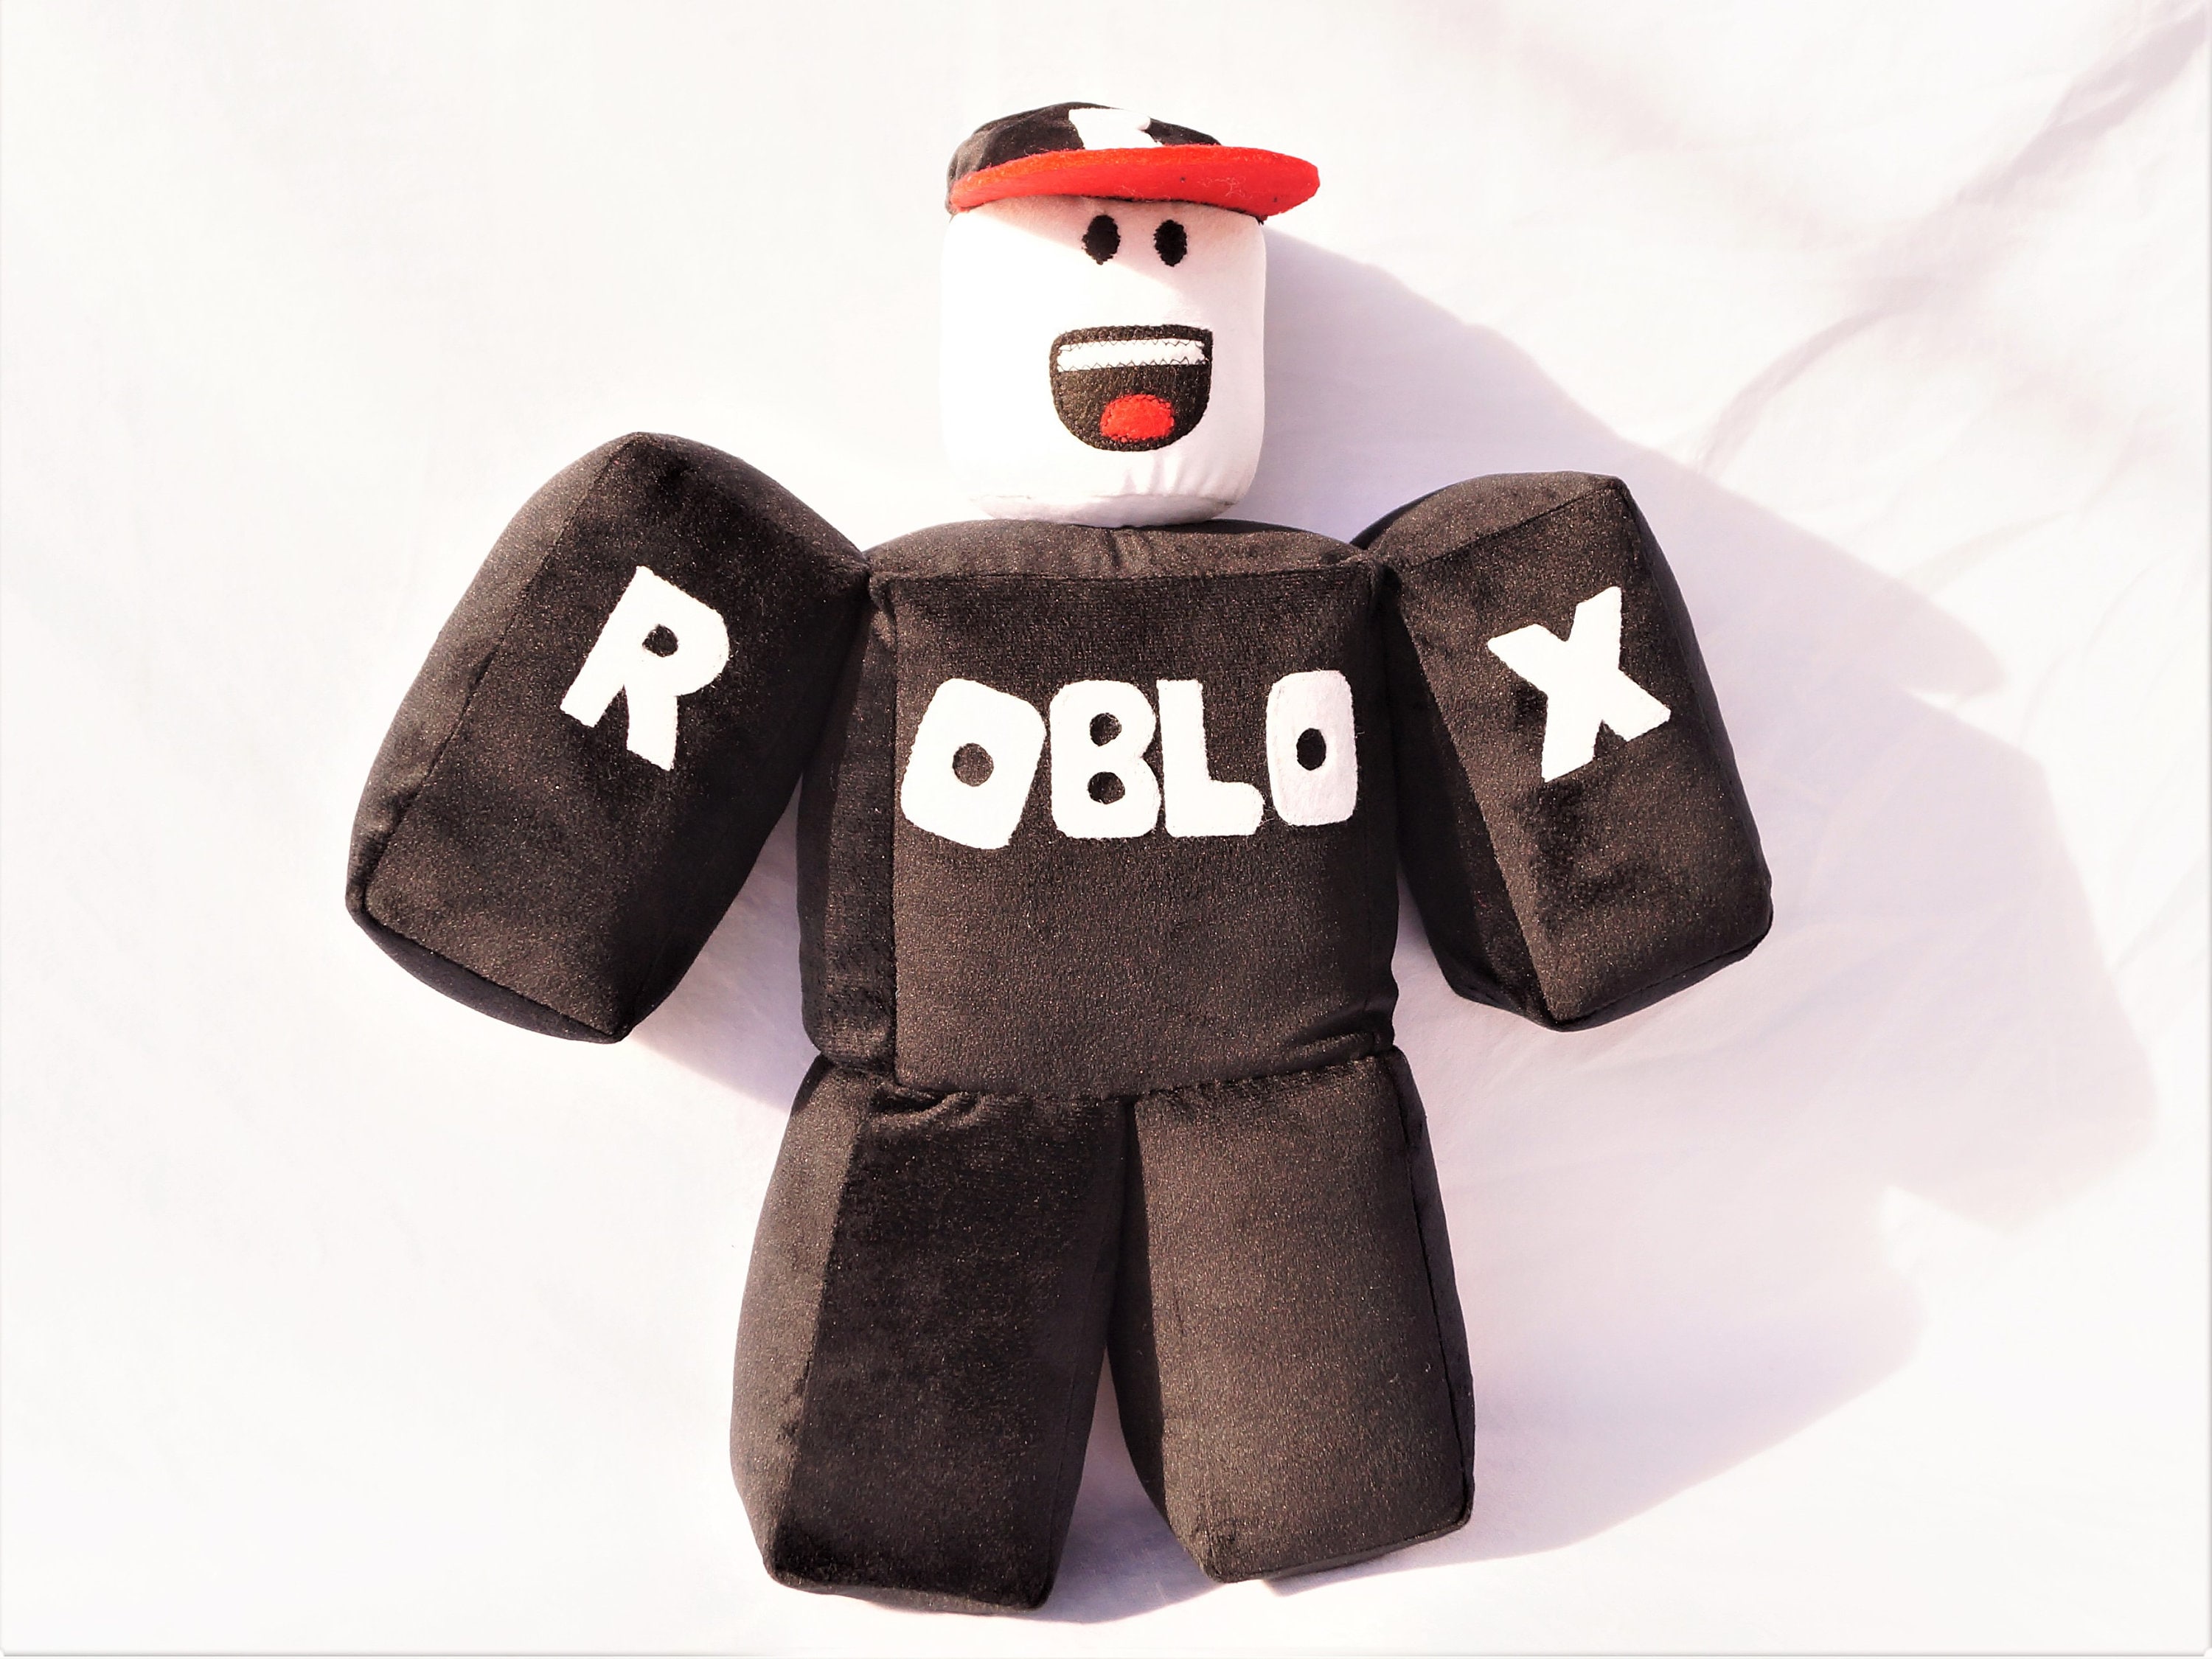 Roblox Break In 2 Plushies Toy Break In Plush Monster Horror Game Scary  Larry